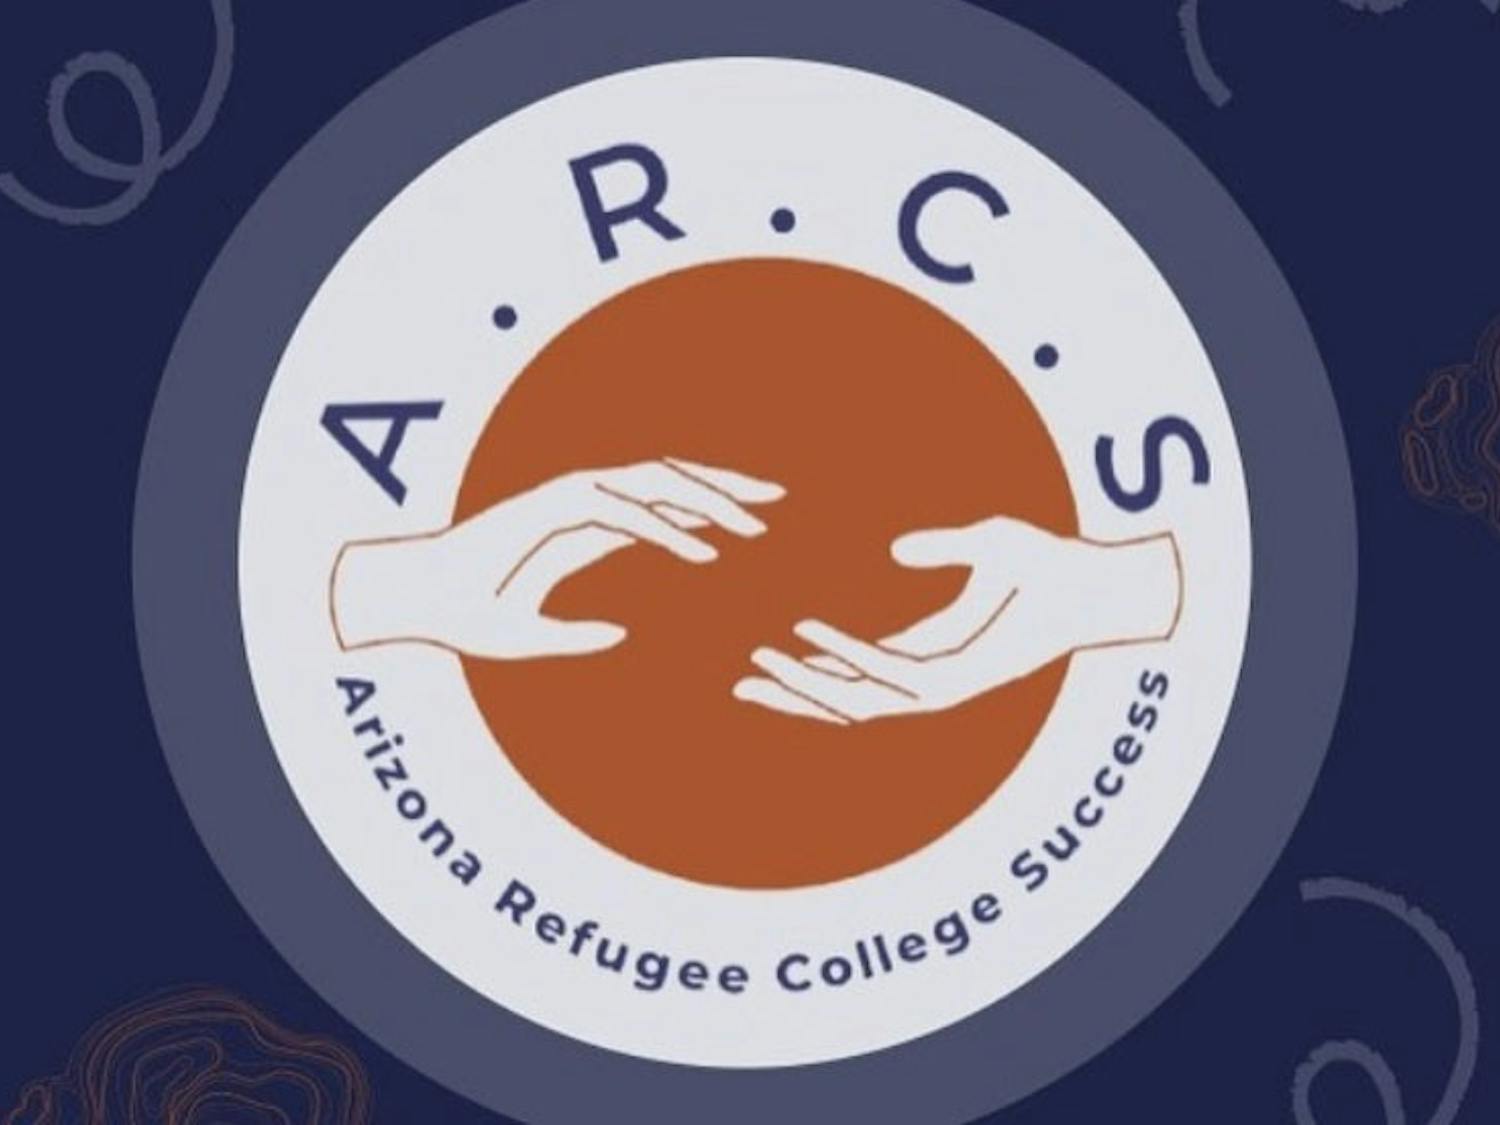 arcs logo